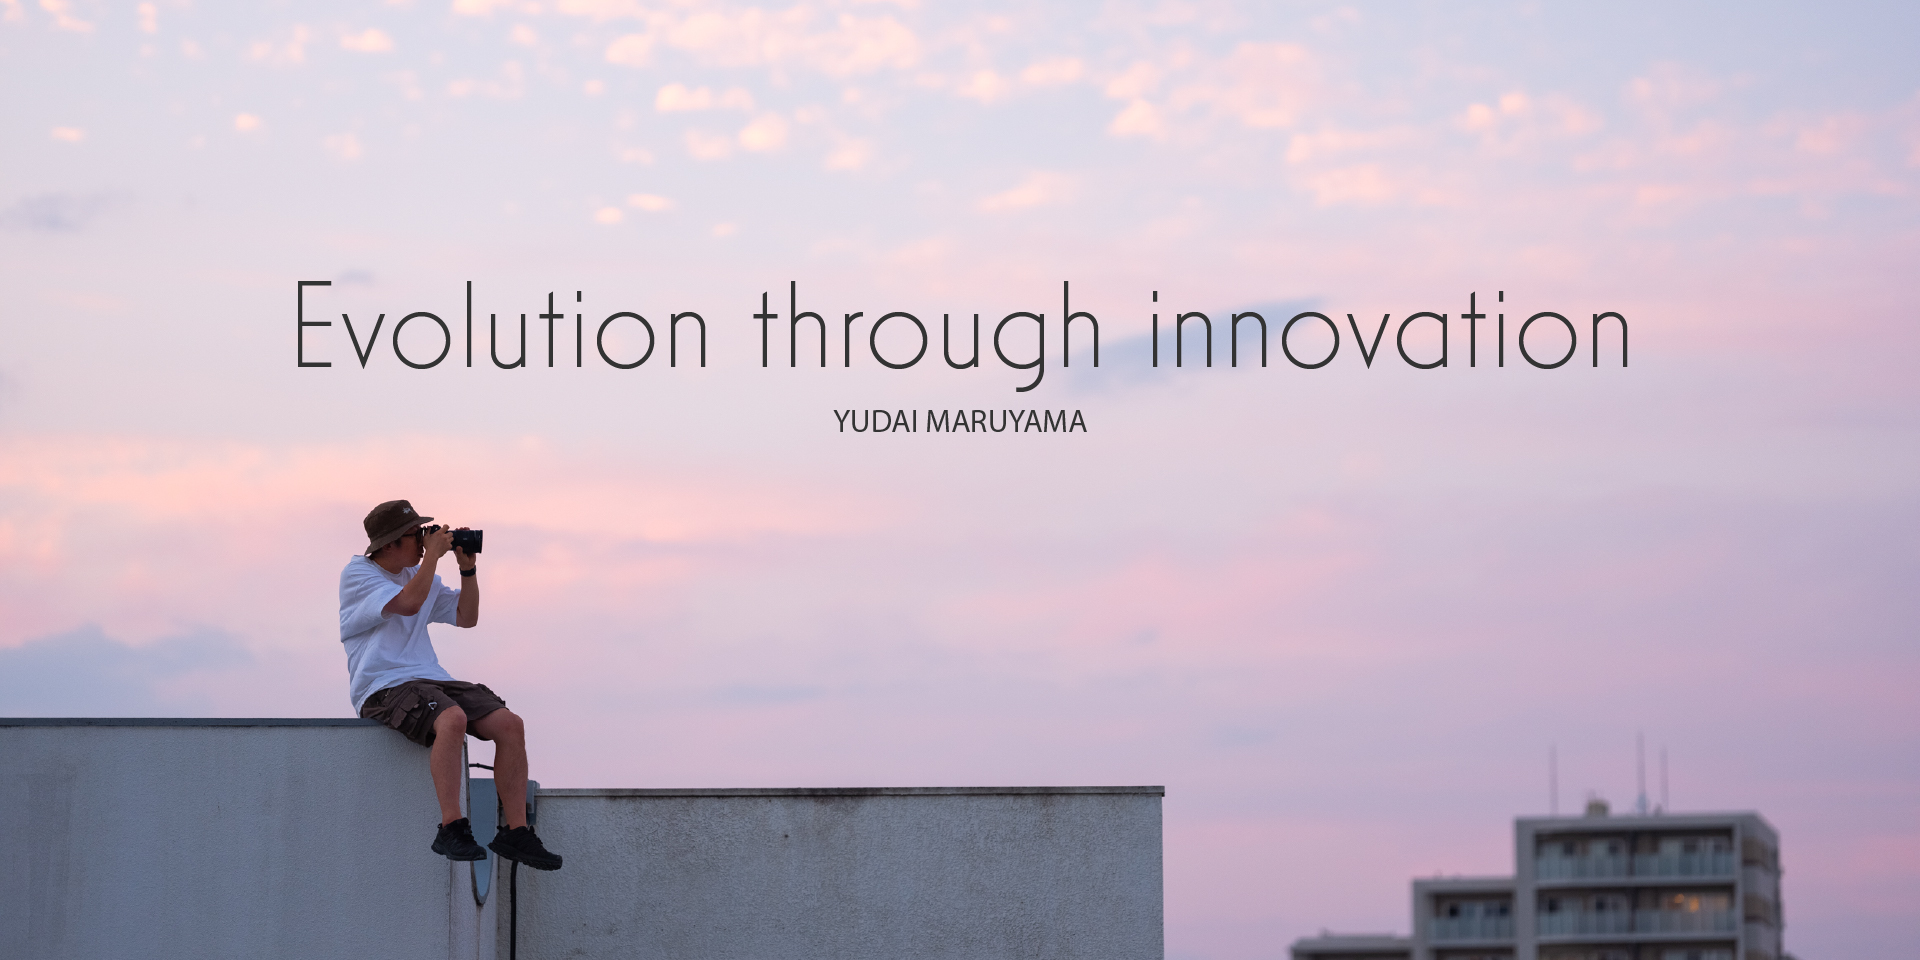 Evolution through innovation YUDAI MARUYAMA